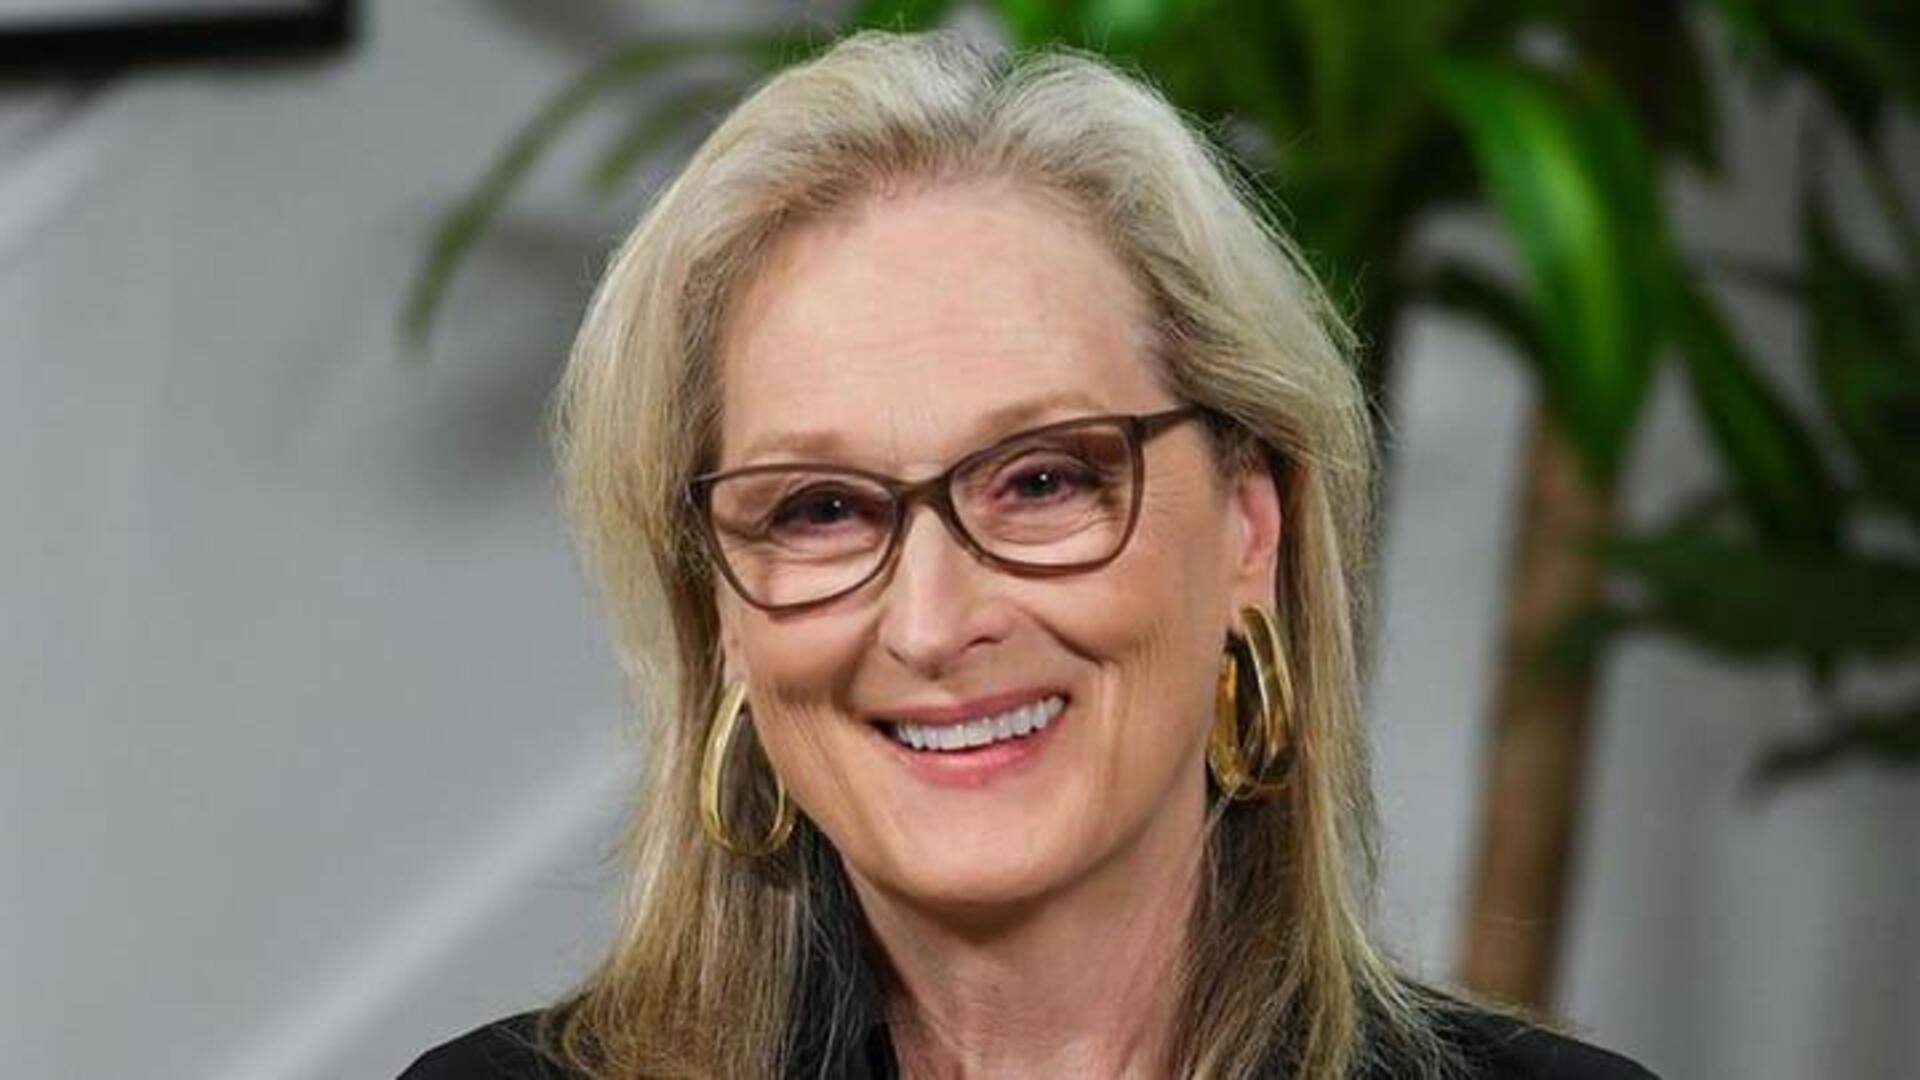 What new Golden Globe Awards record has Meryl Streep set